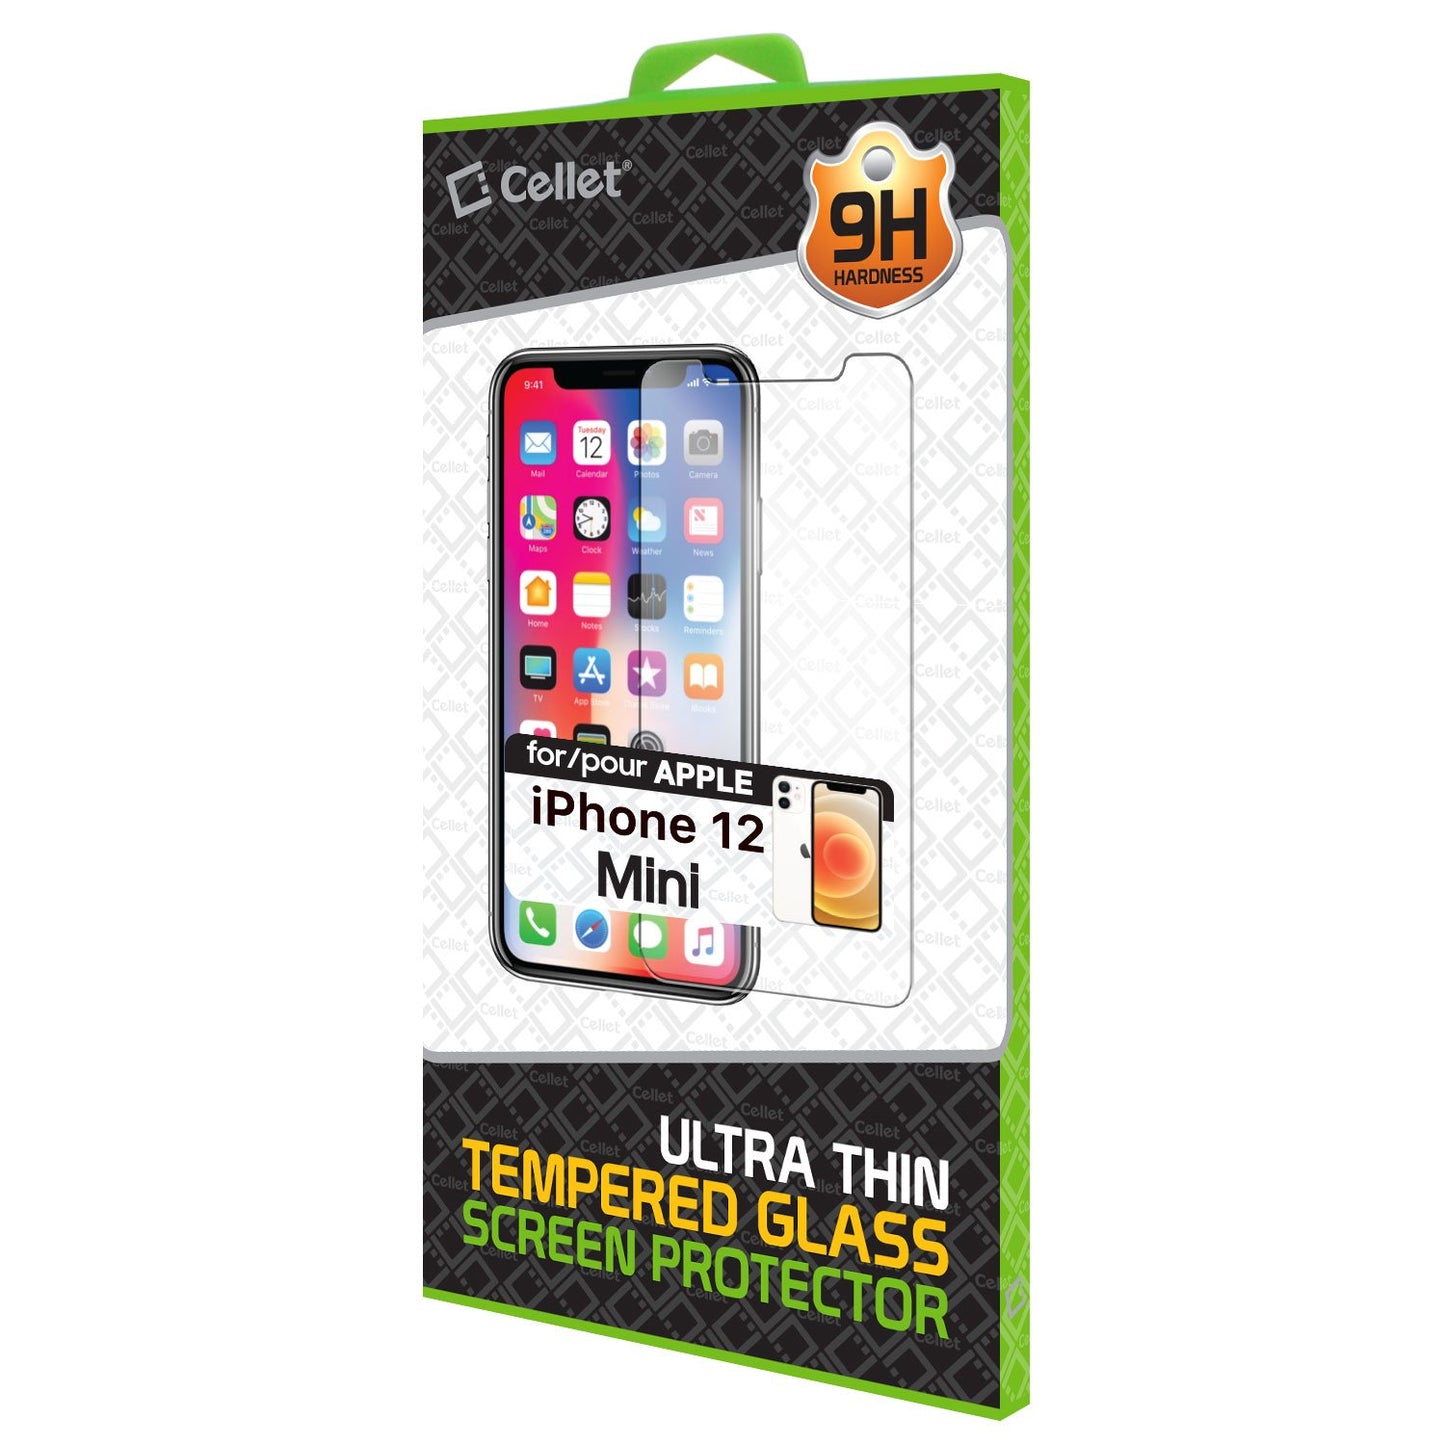 SGIPH12MINI - Tempered Glass Screen Protector, 9H Hardness - iPhone 12 mini